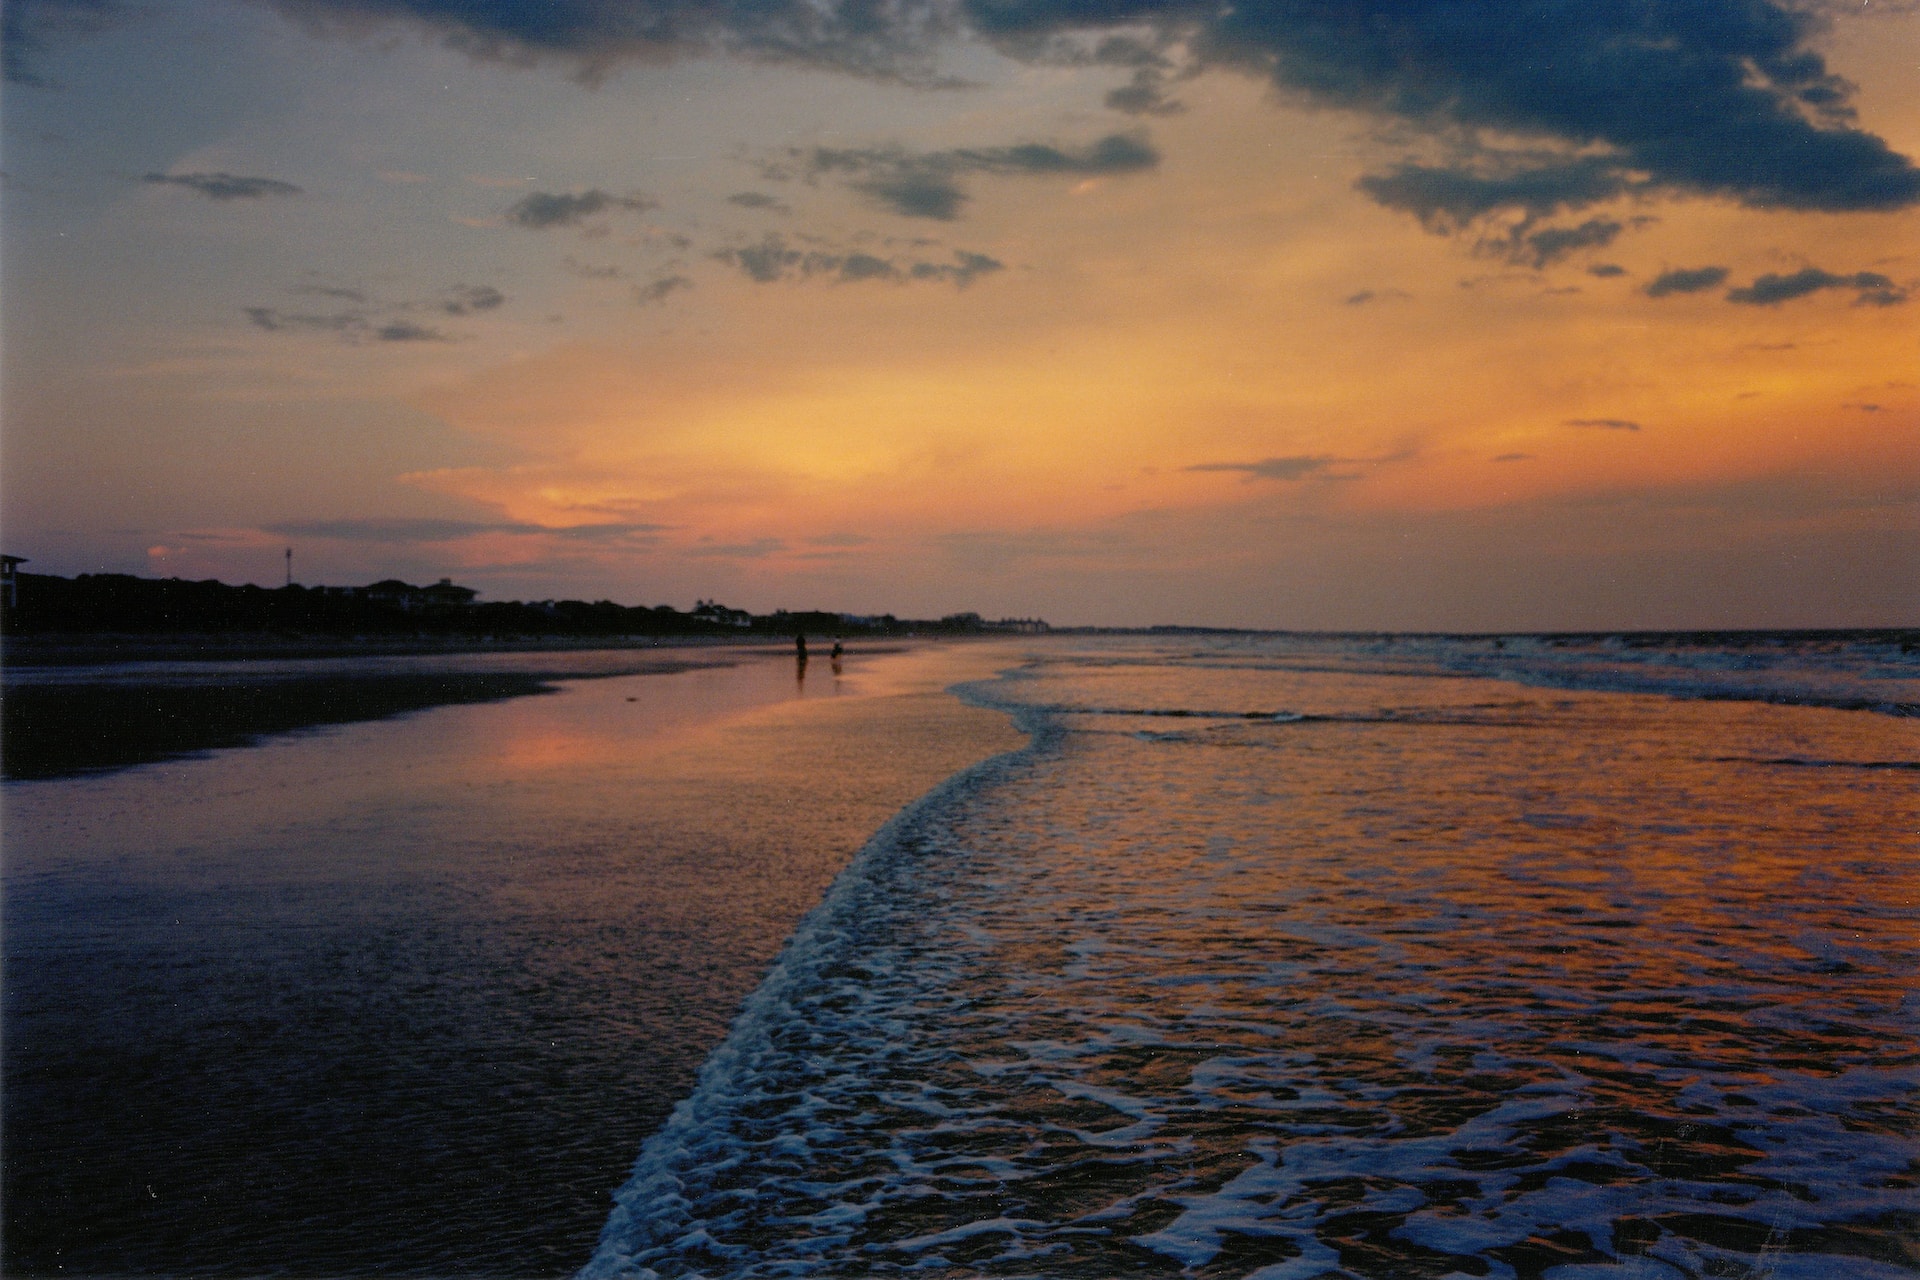 Sunset at the beach on Kiawah Island, South Carolina.